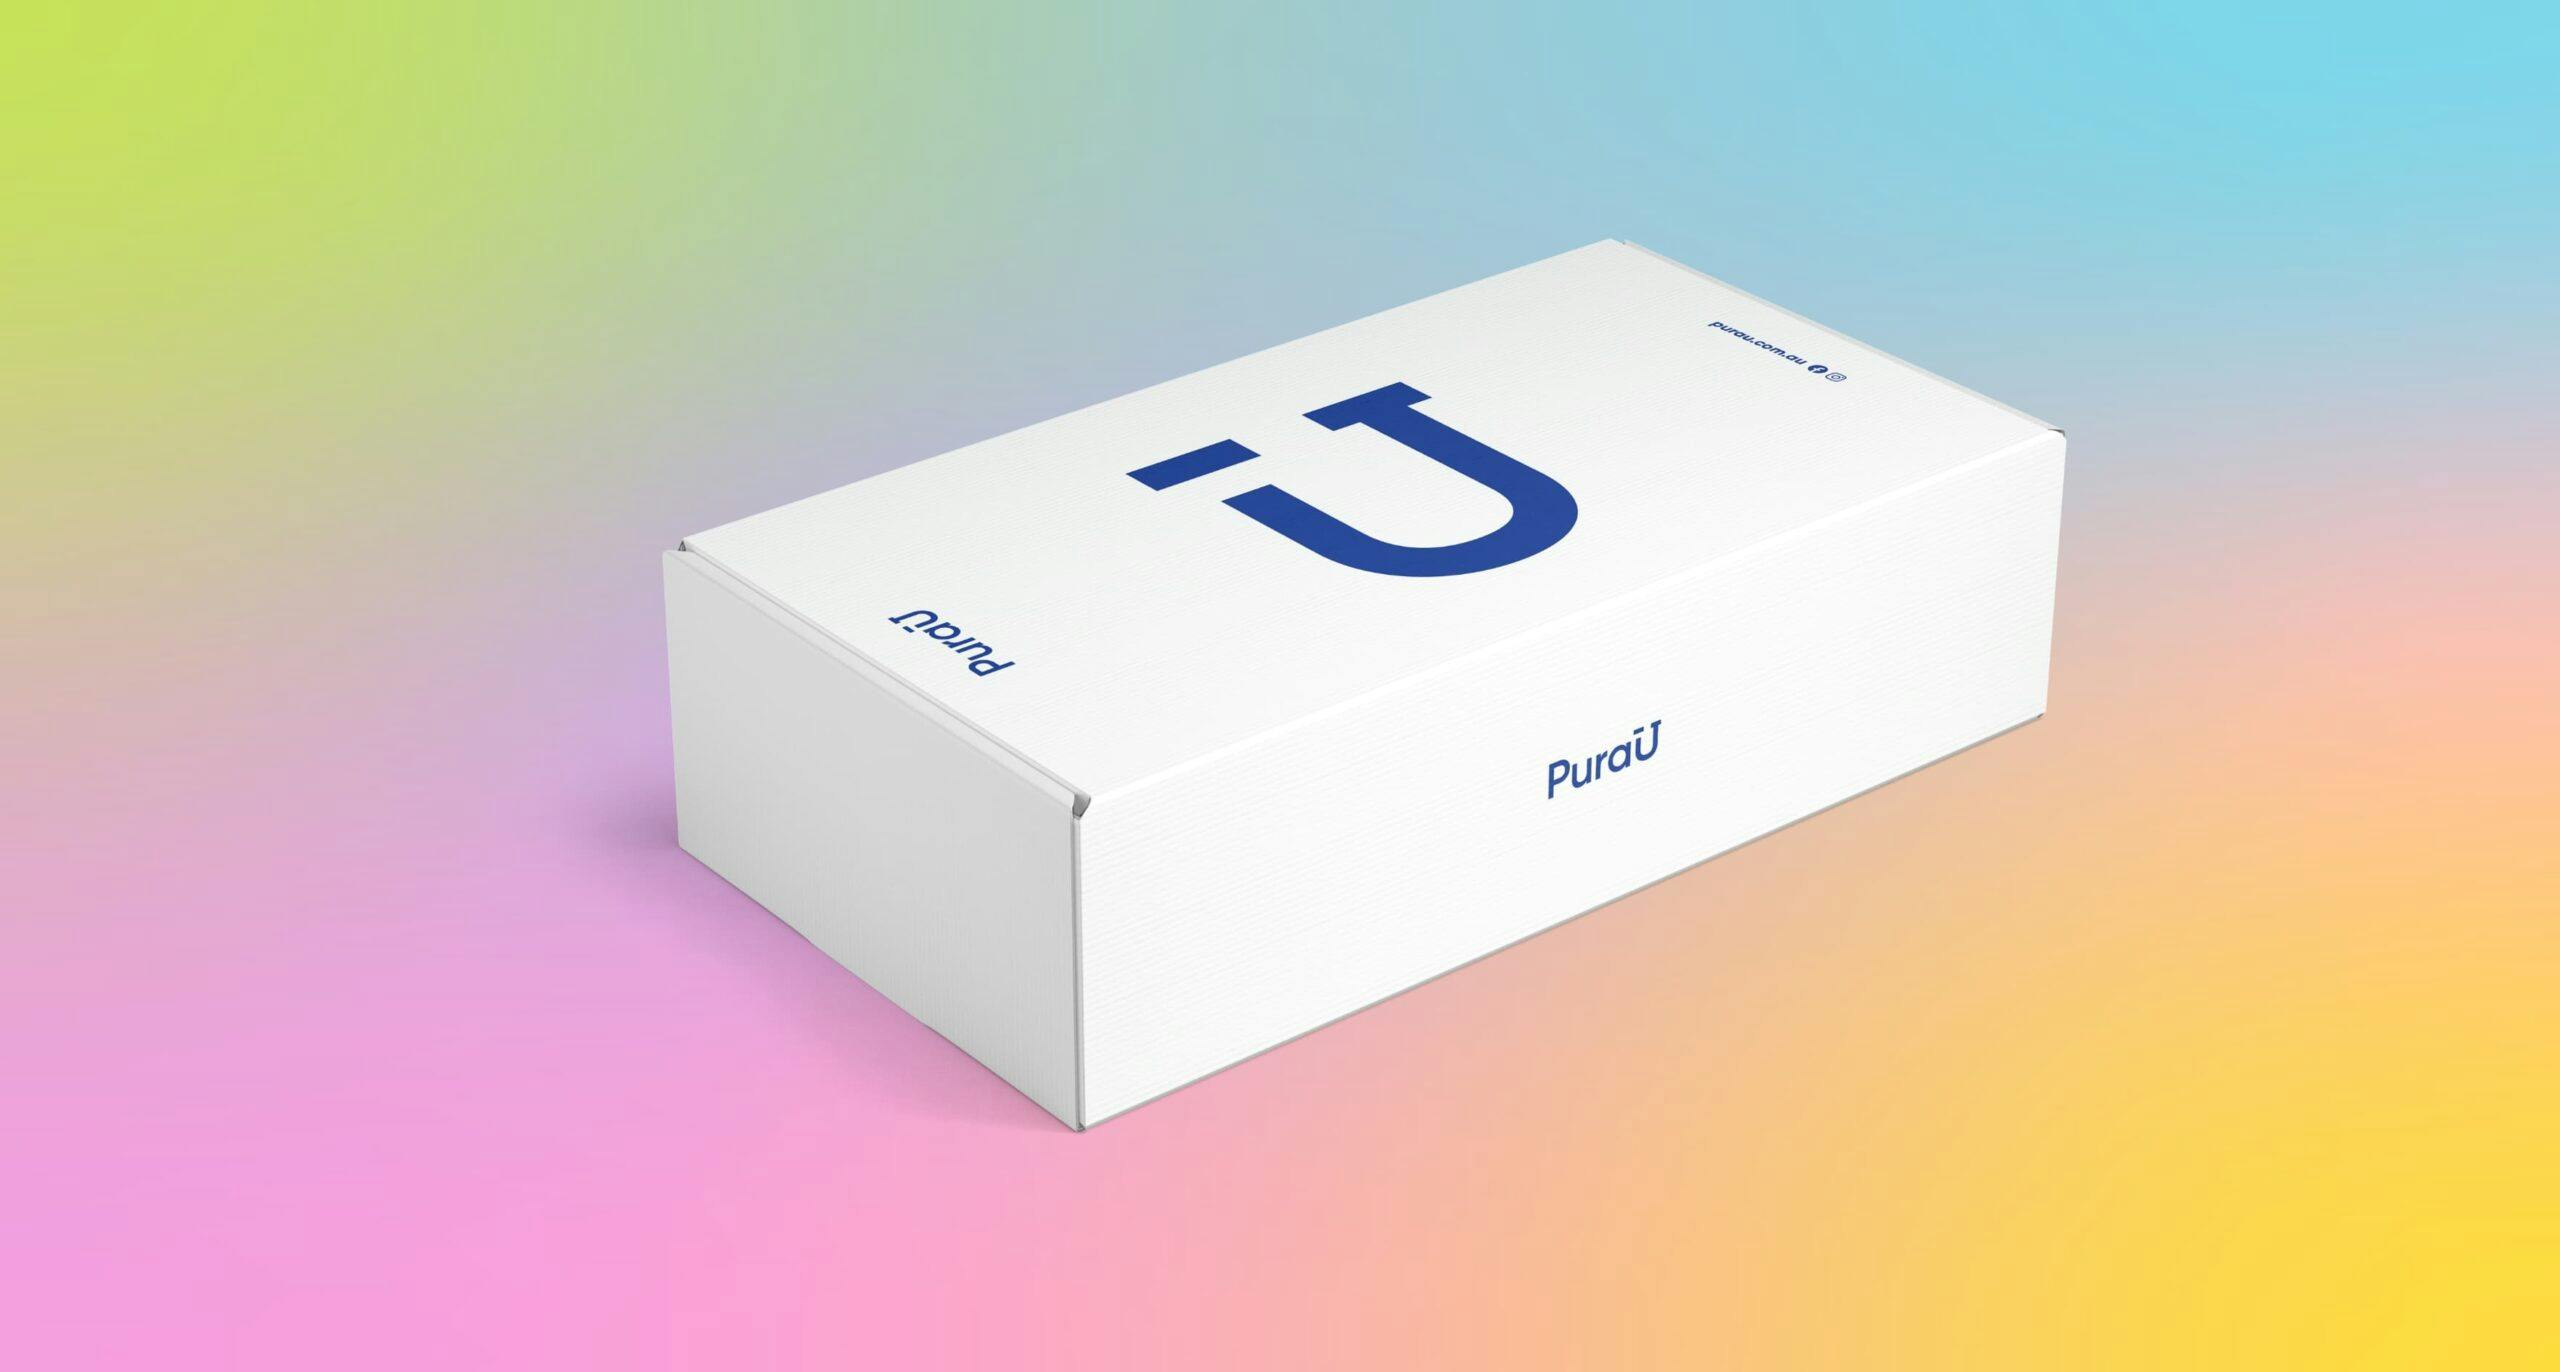 PuraU cardboard box brand packaging mockup